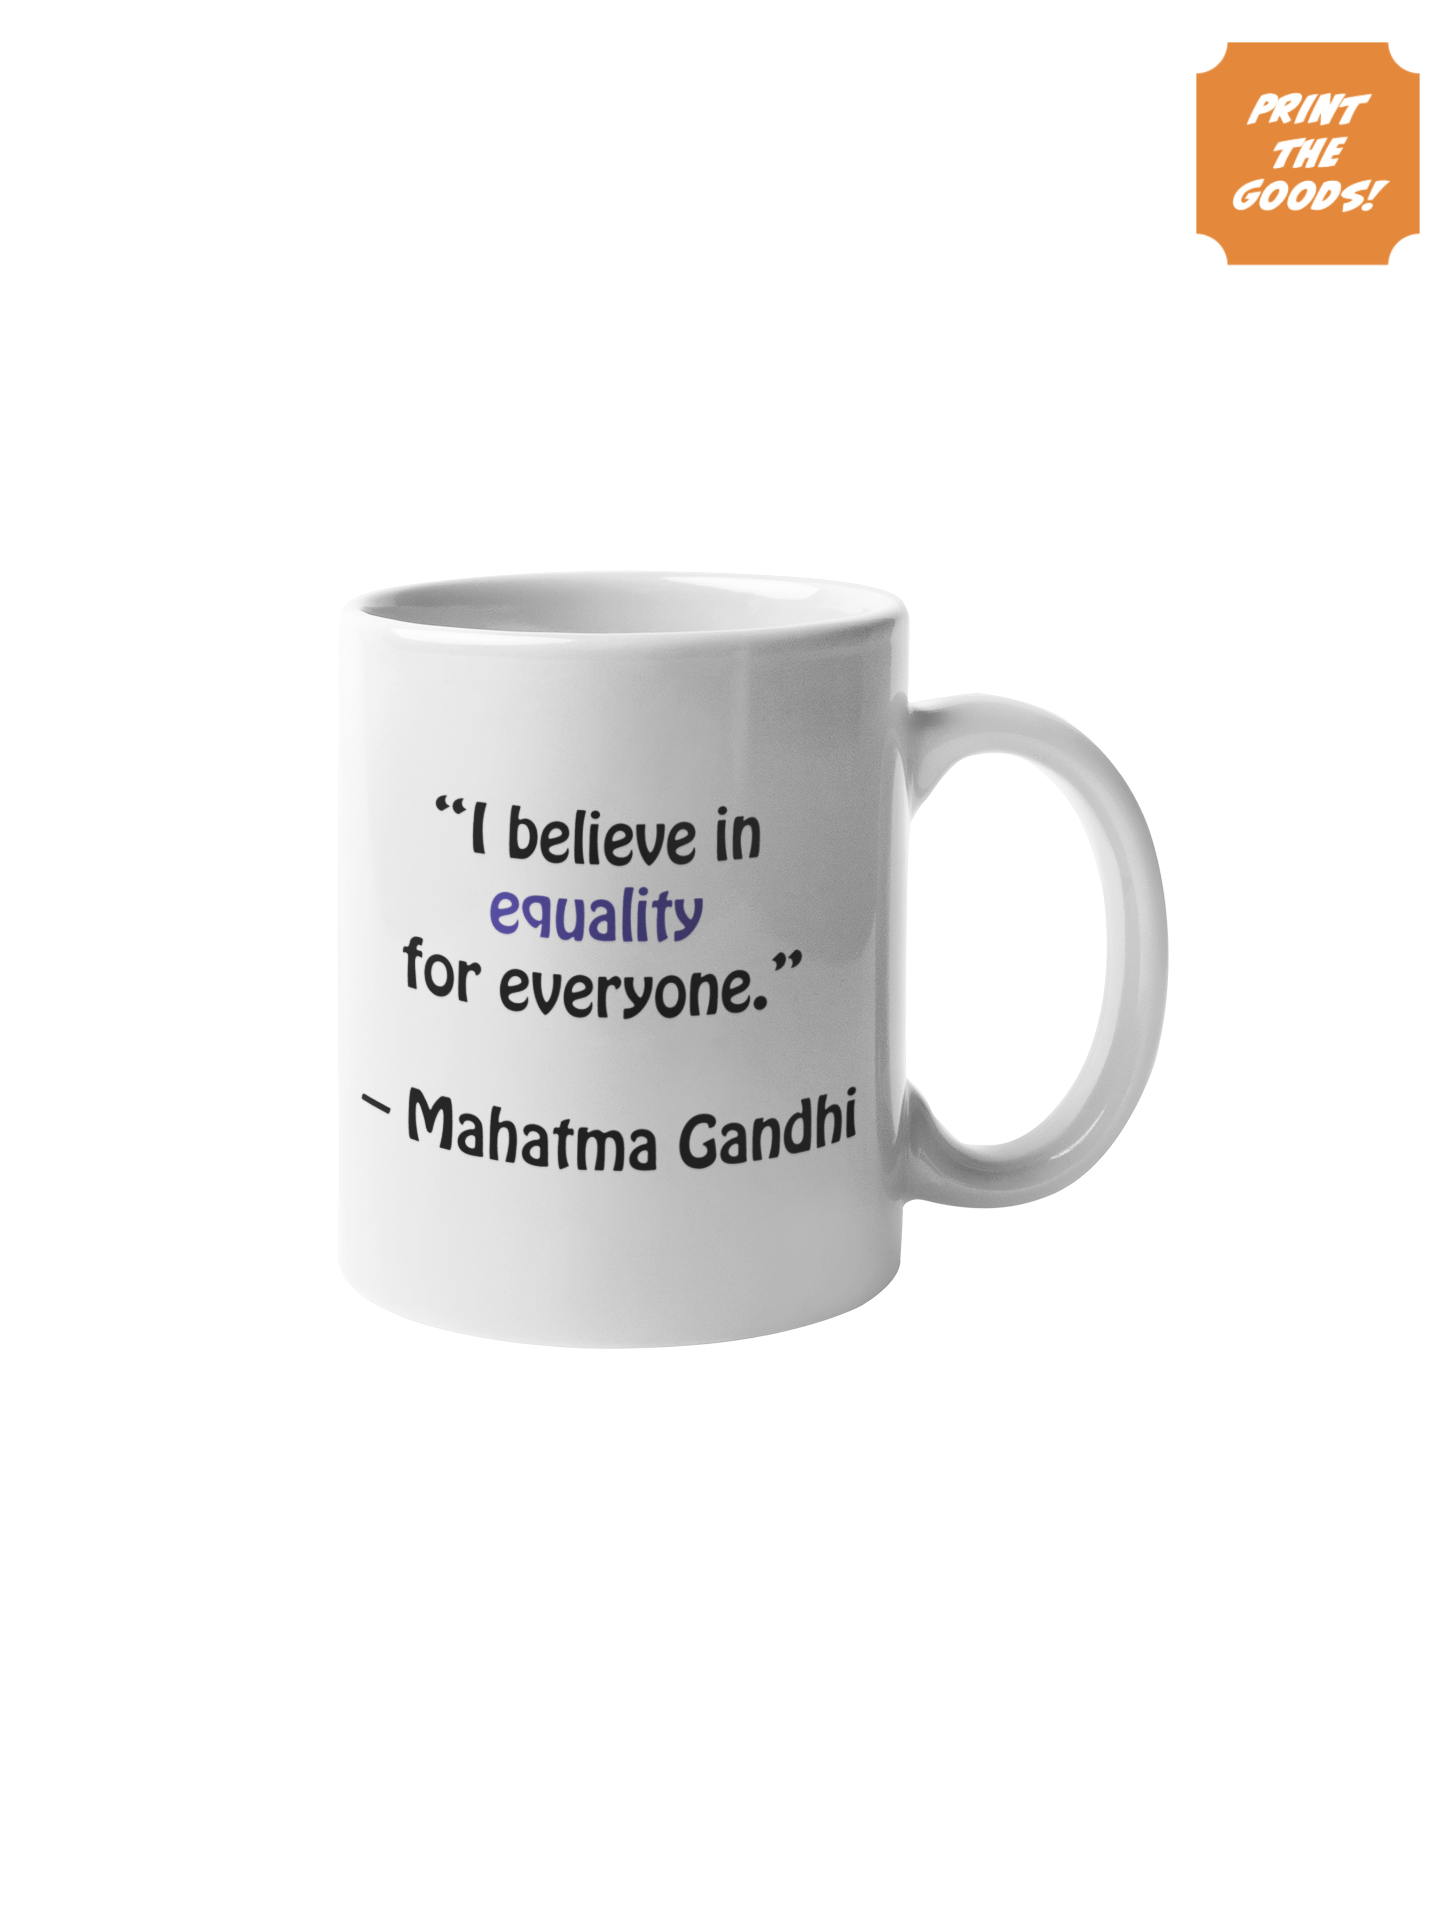 Mahatma Gandhi quote mug